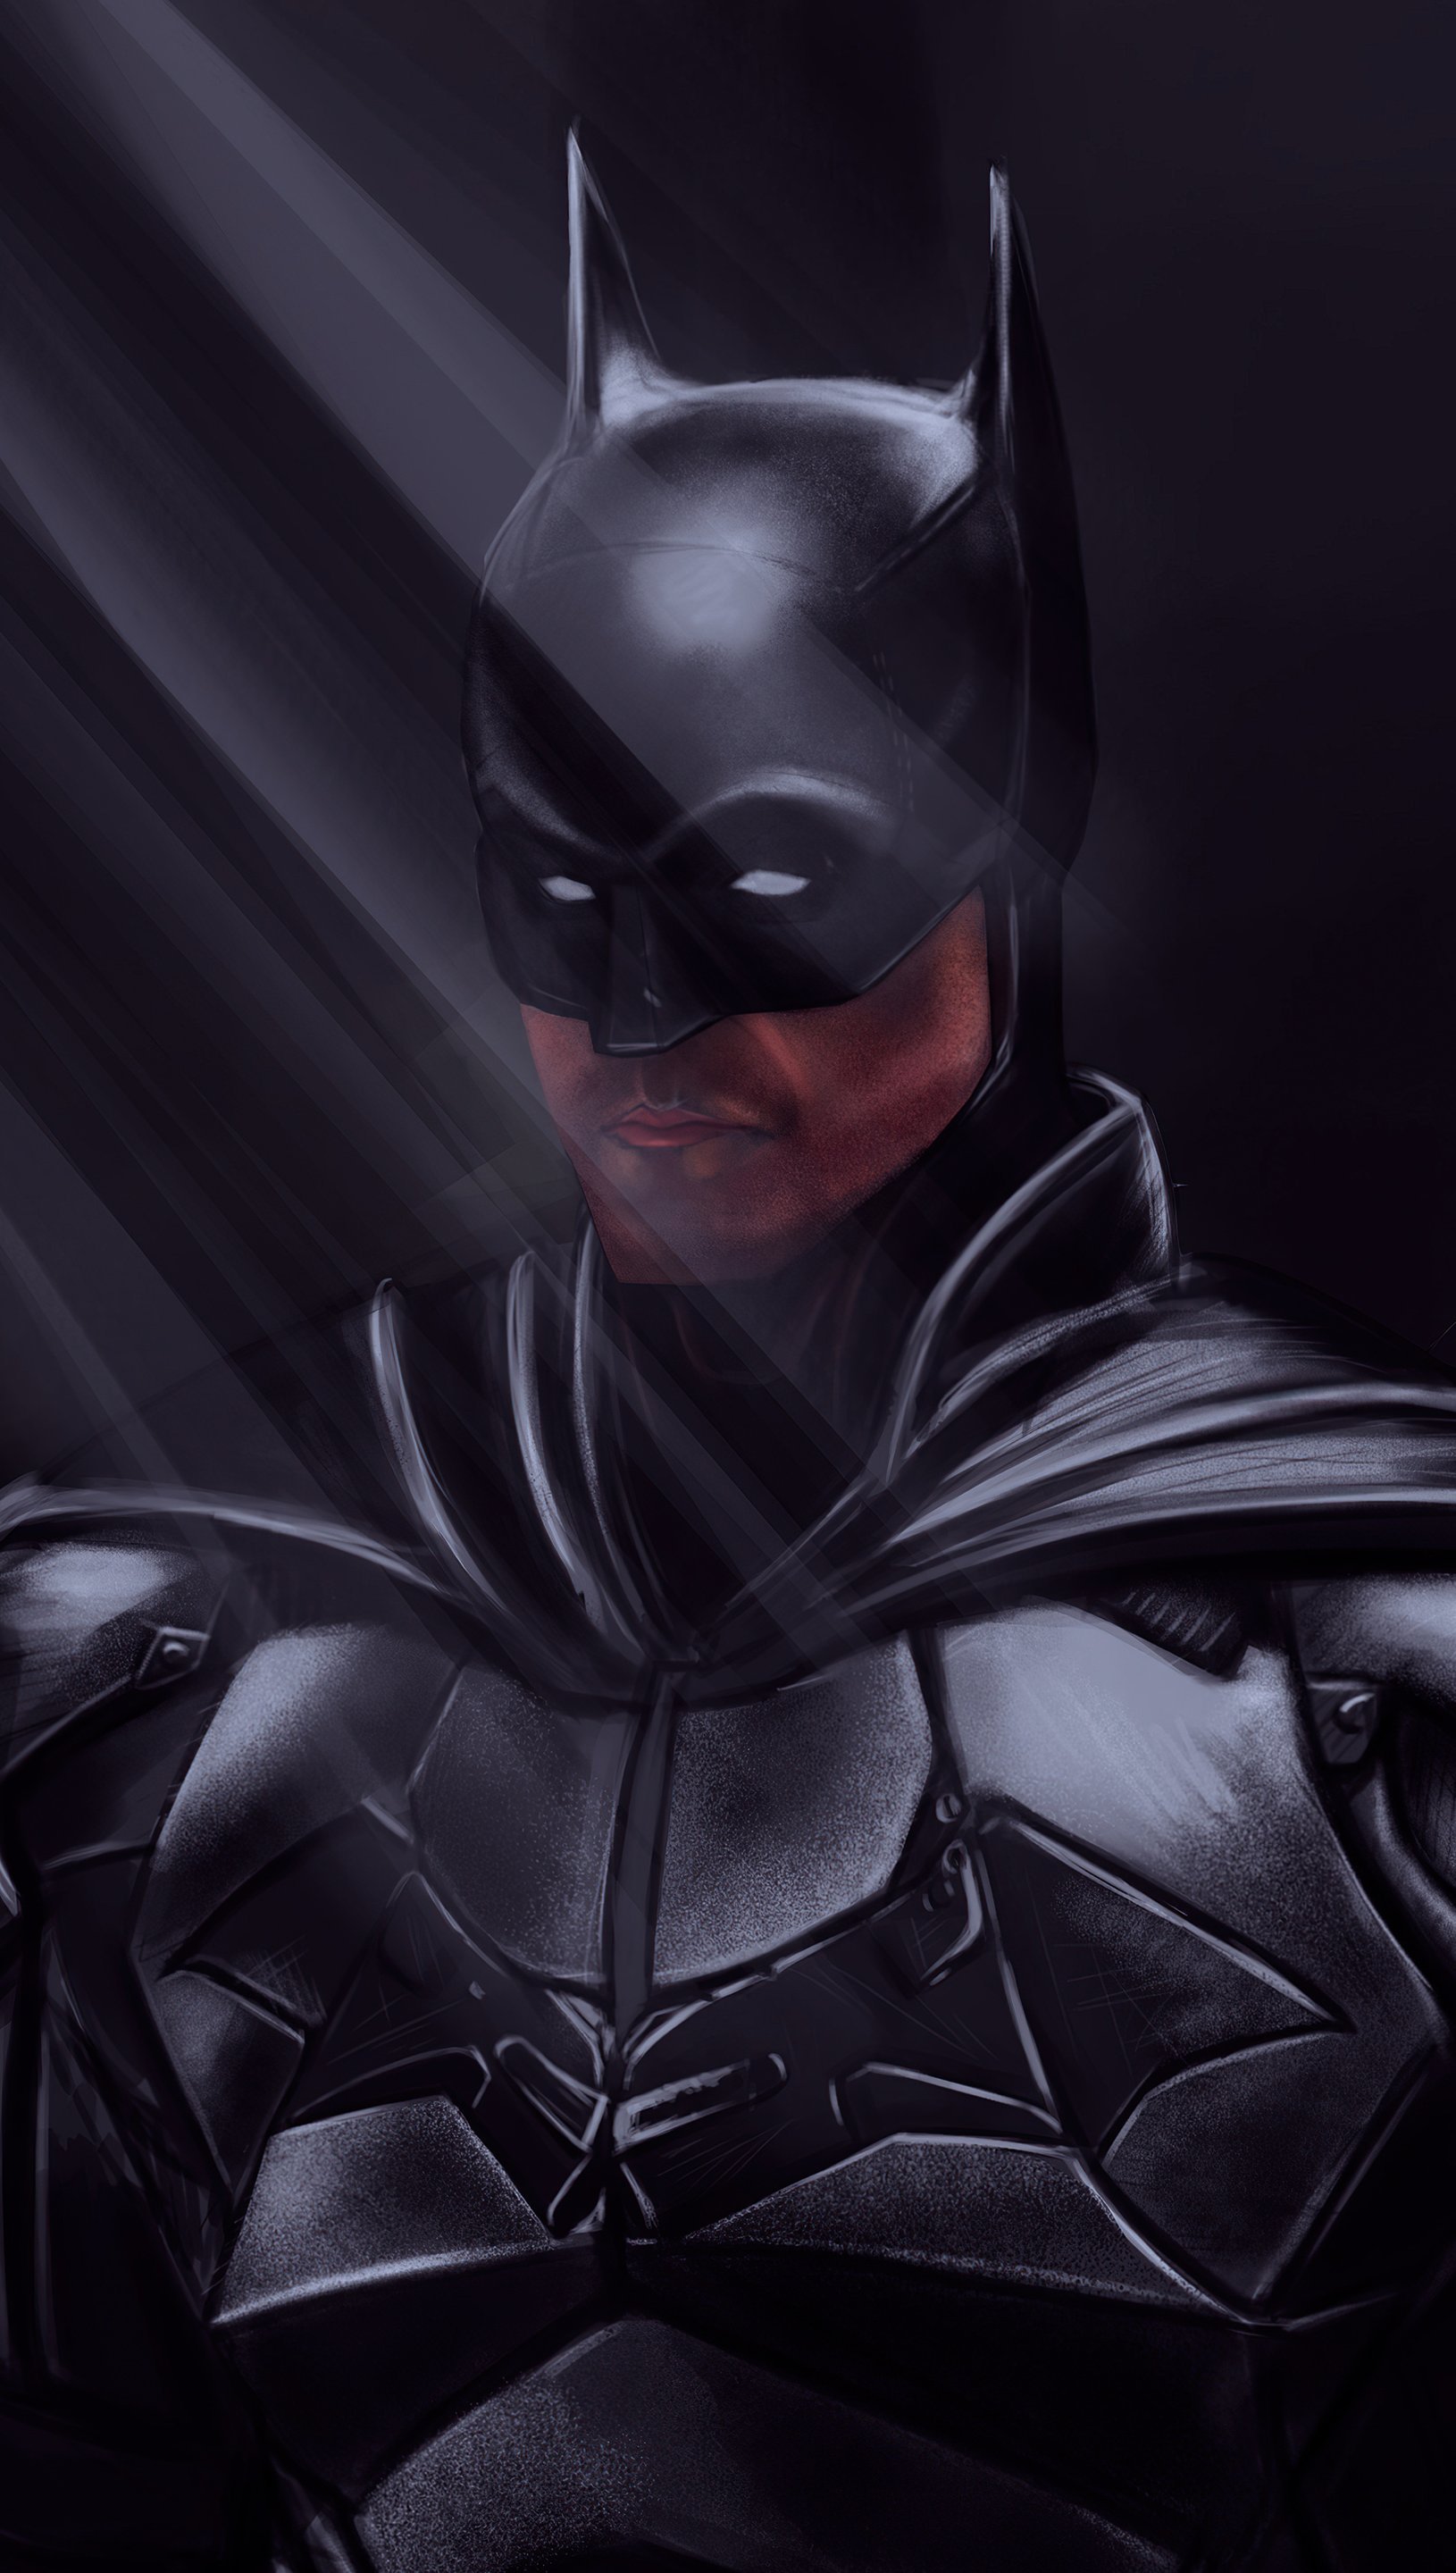 Wallpaper Batman in the dark Vertical